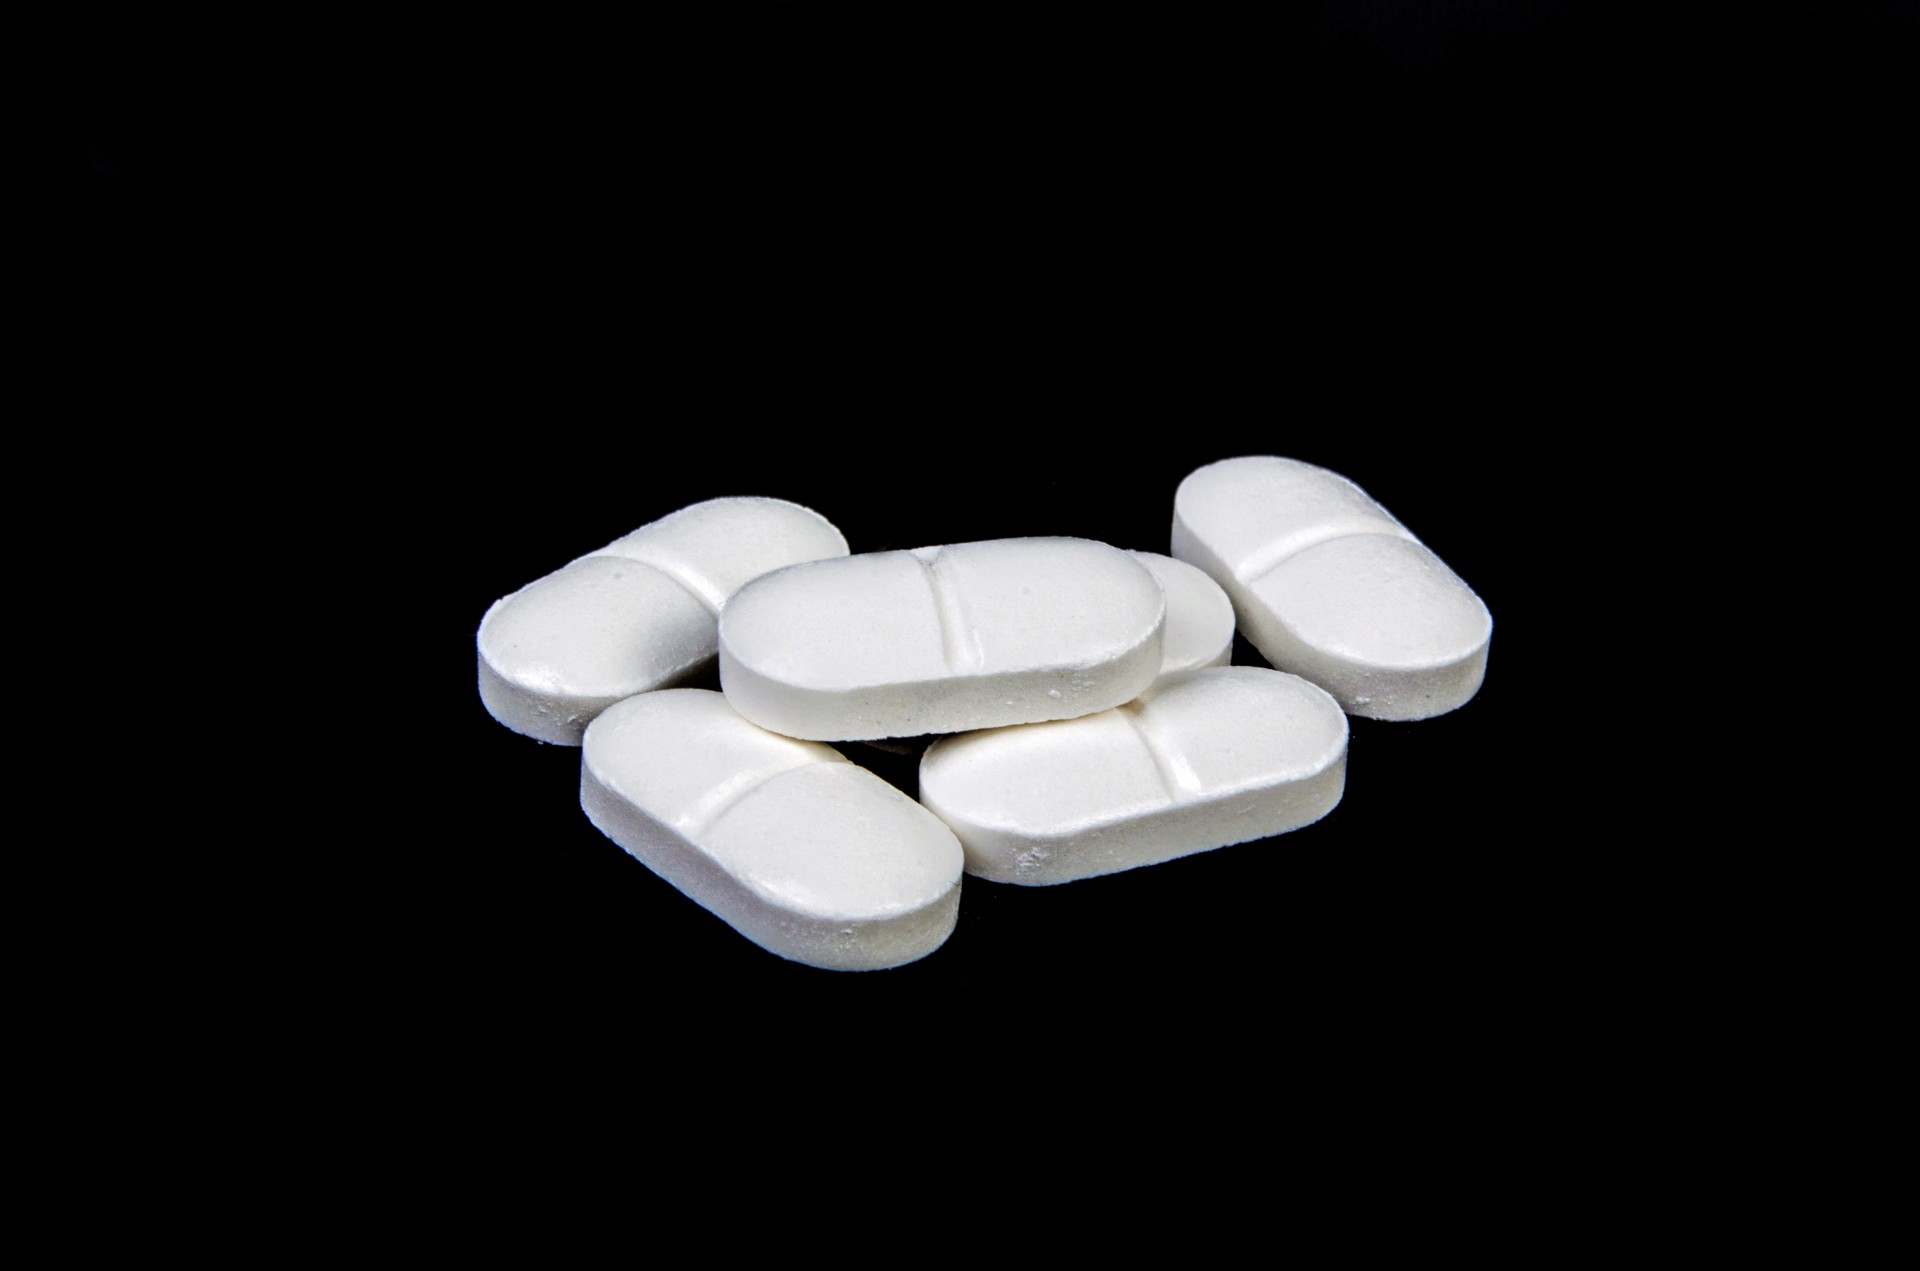 paracetamol medication pills free photo